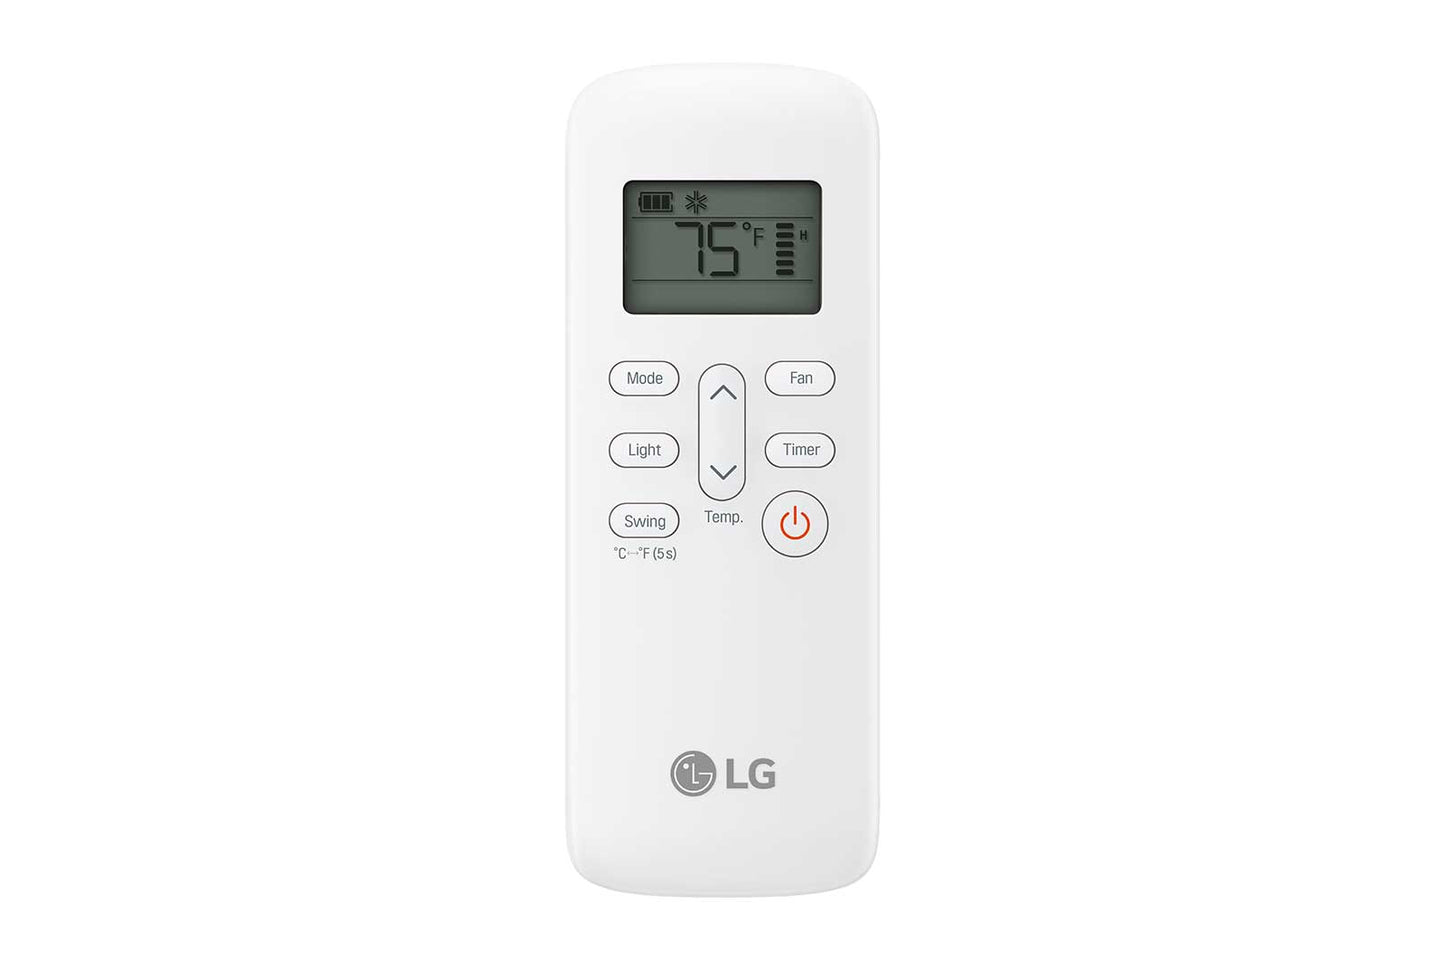 Lg LP1021BHSM 10,000 Btu Smart Wi-Fi Portable Air Conditioner, Cooling & Heating